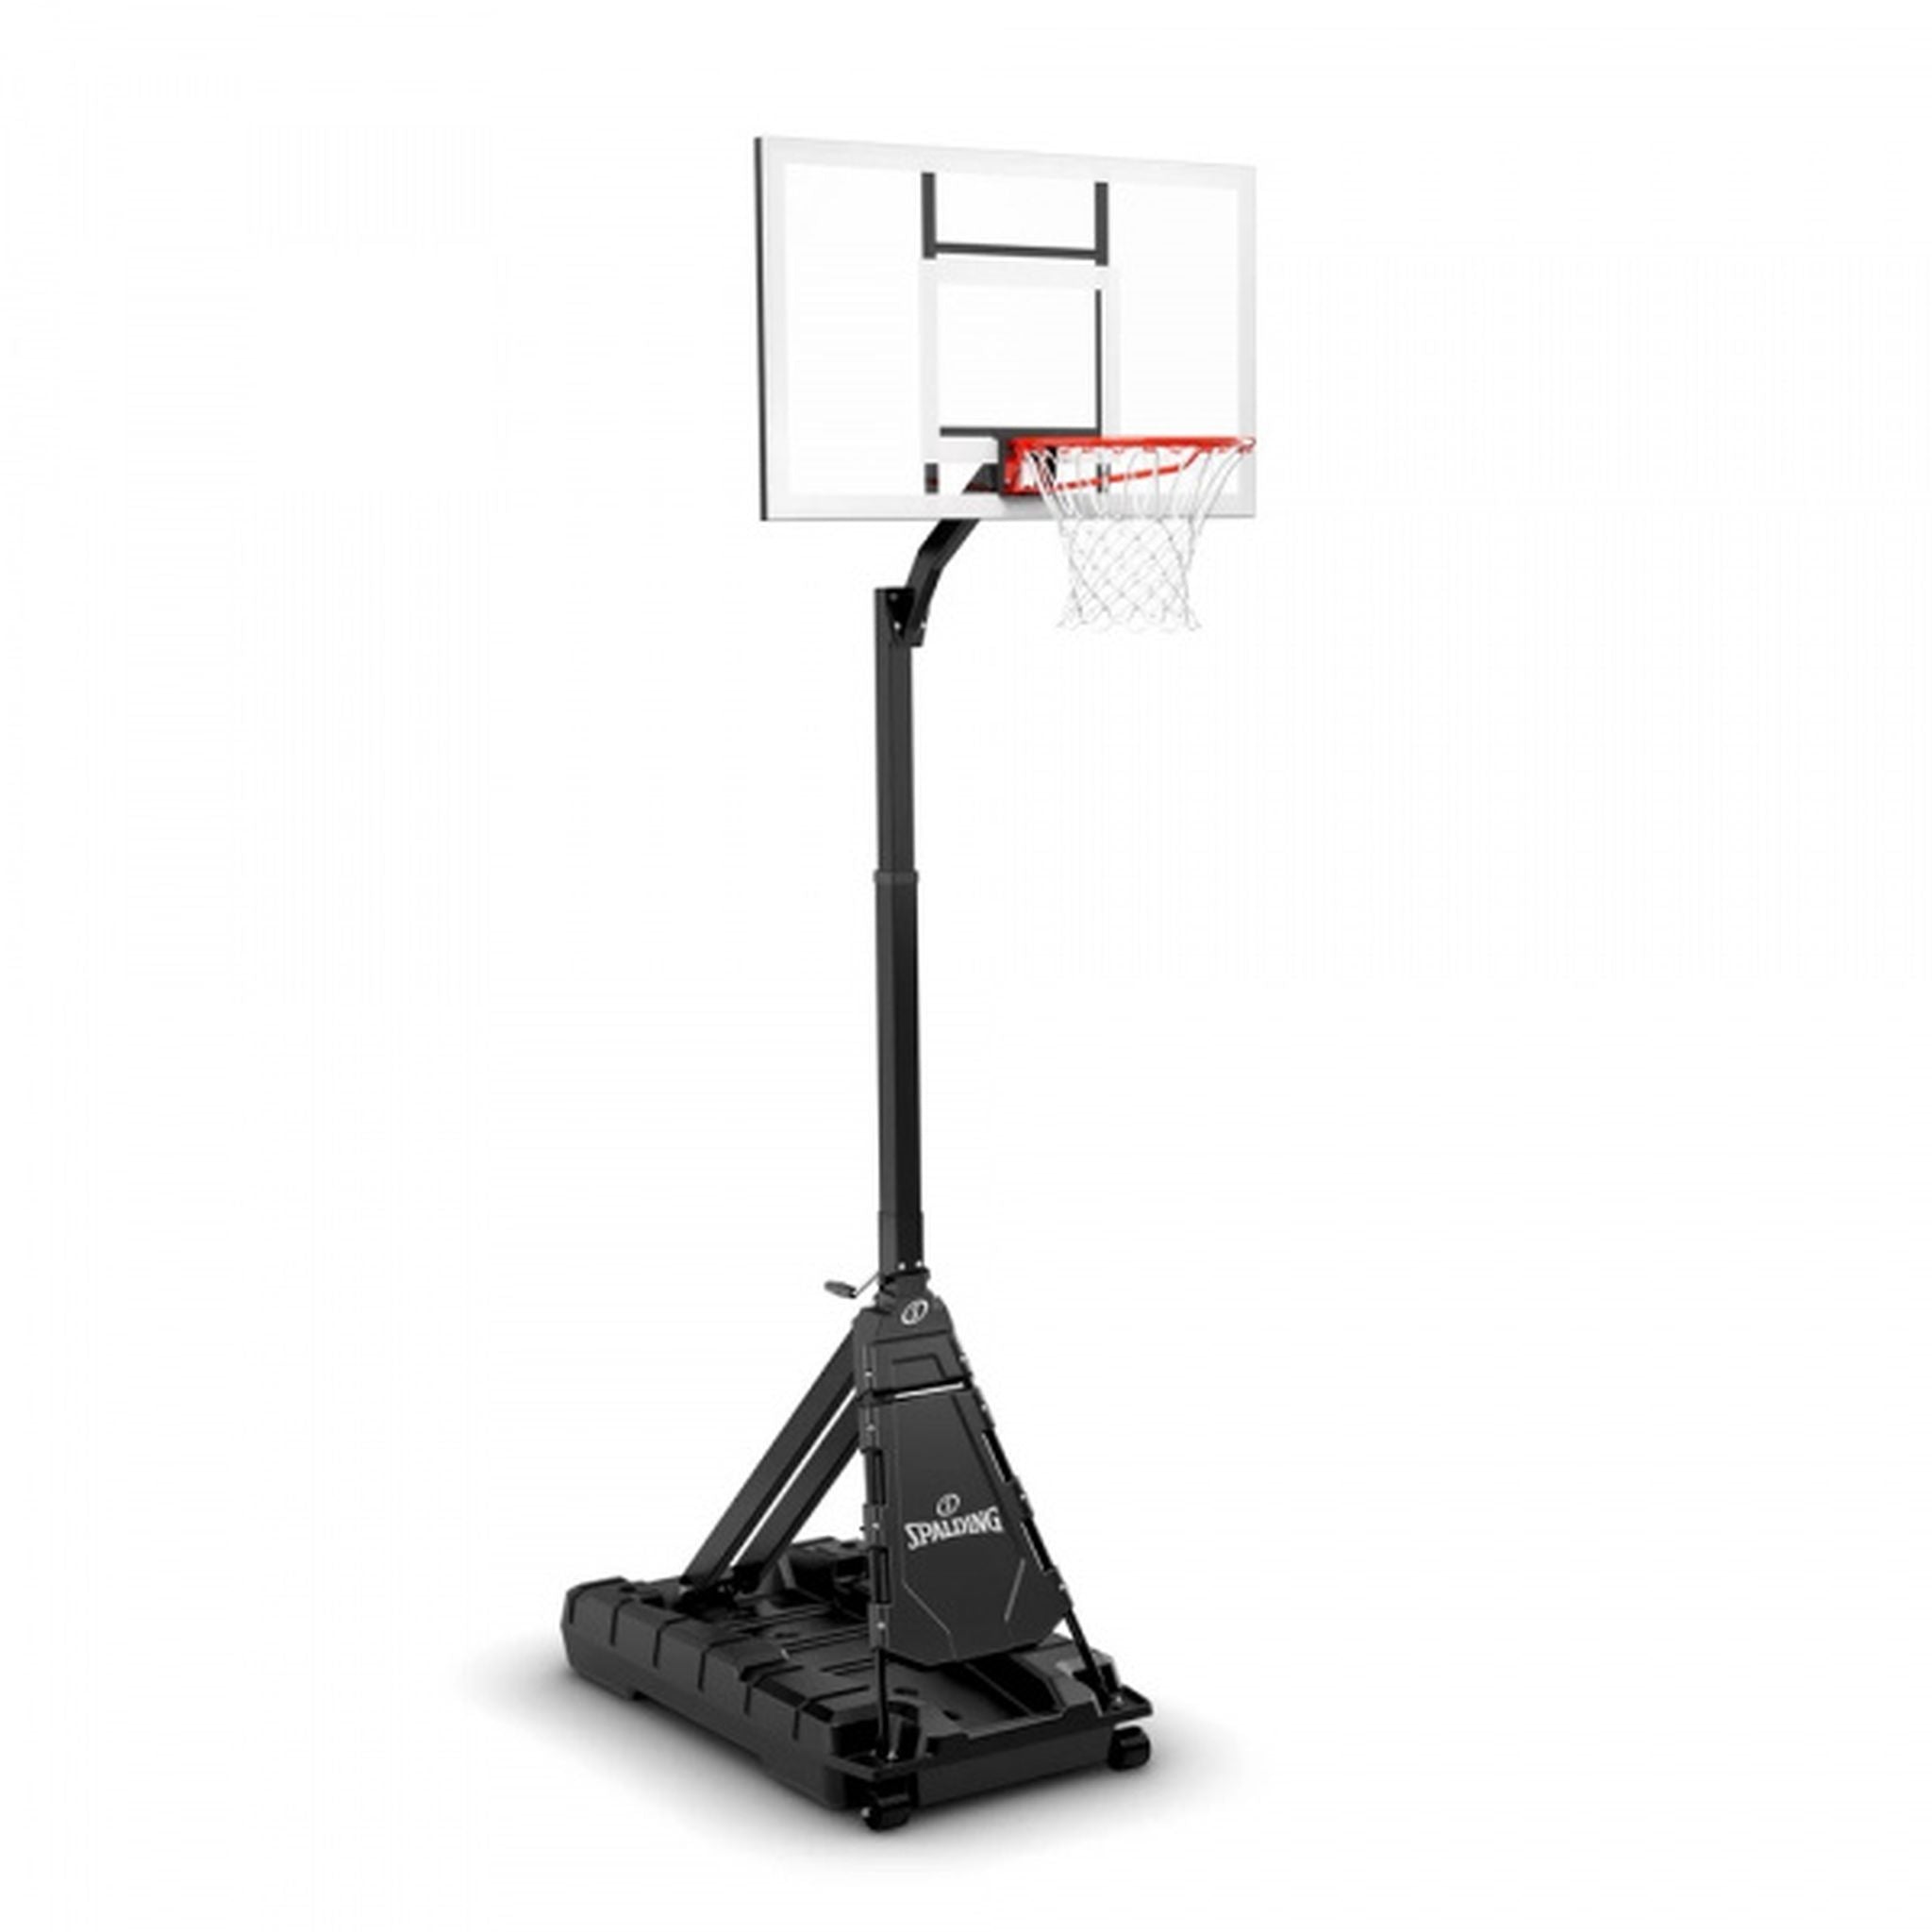 Spalding 50-inch Momentous EZ Assembly Acrylic Port Basketball System